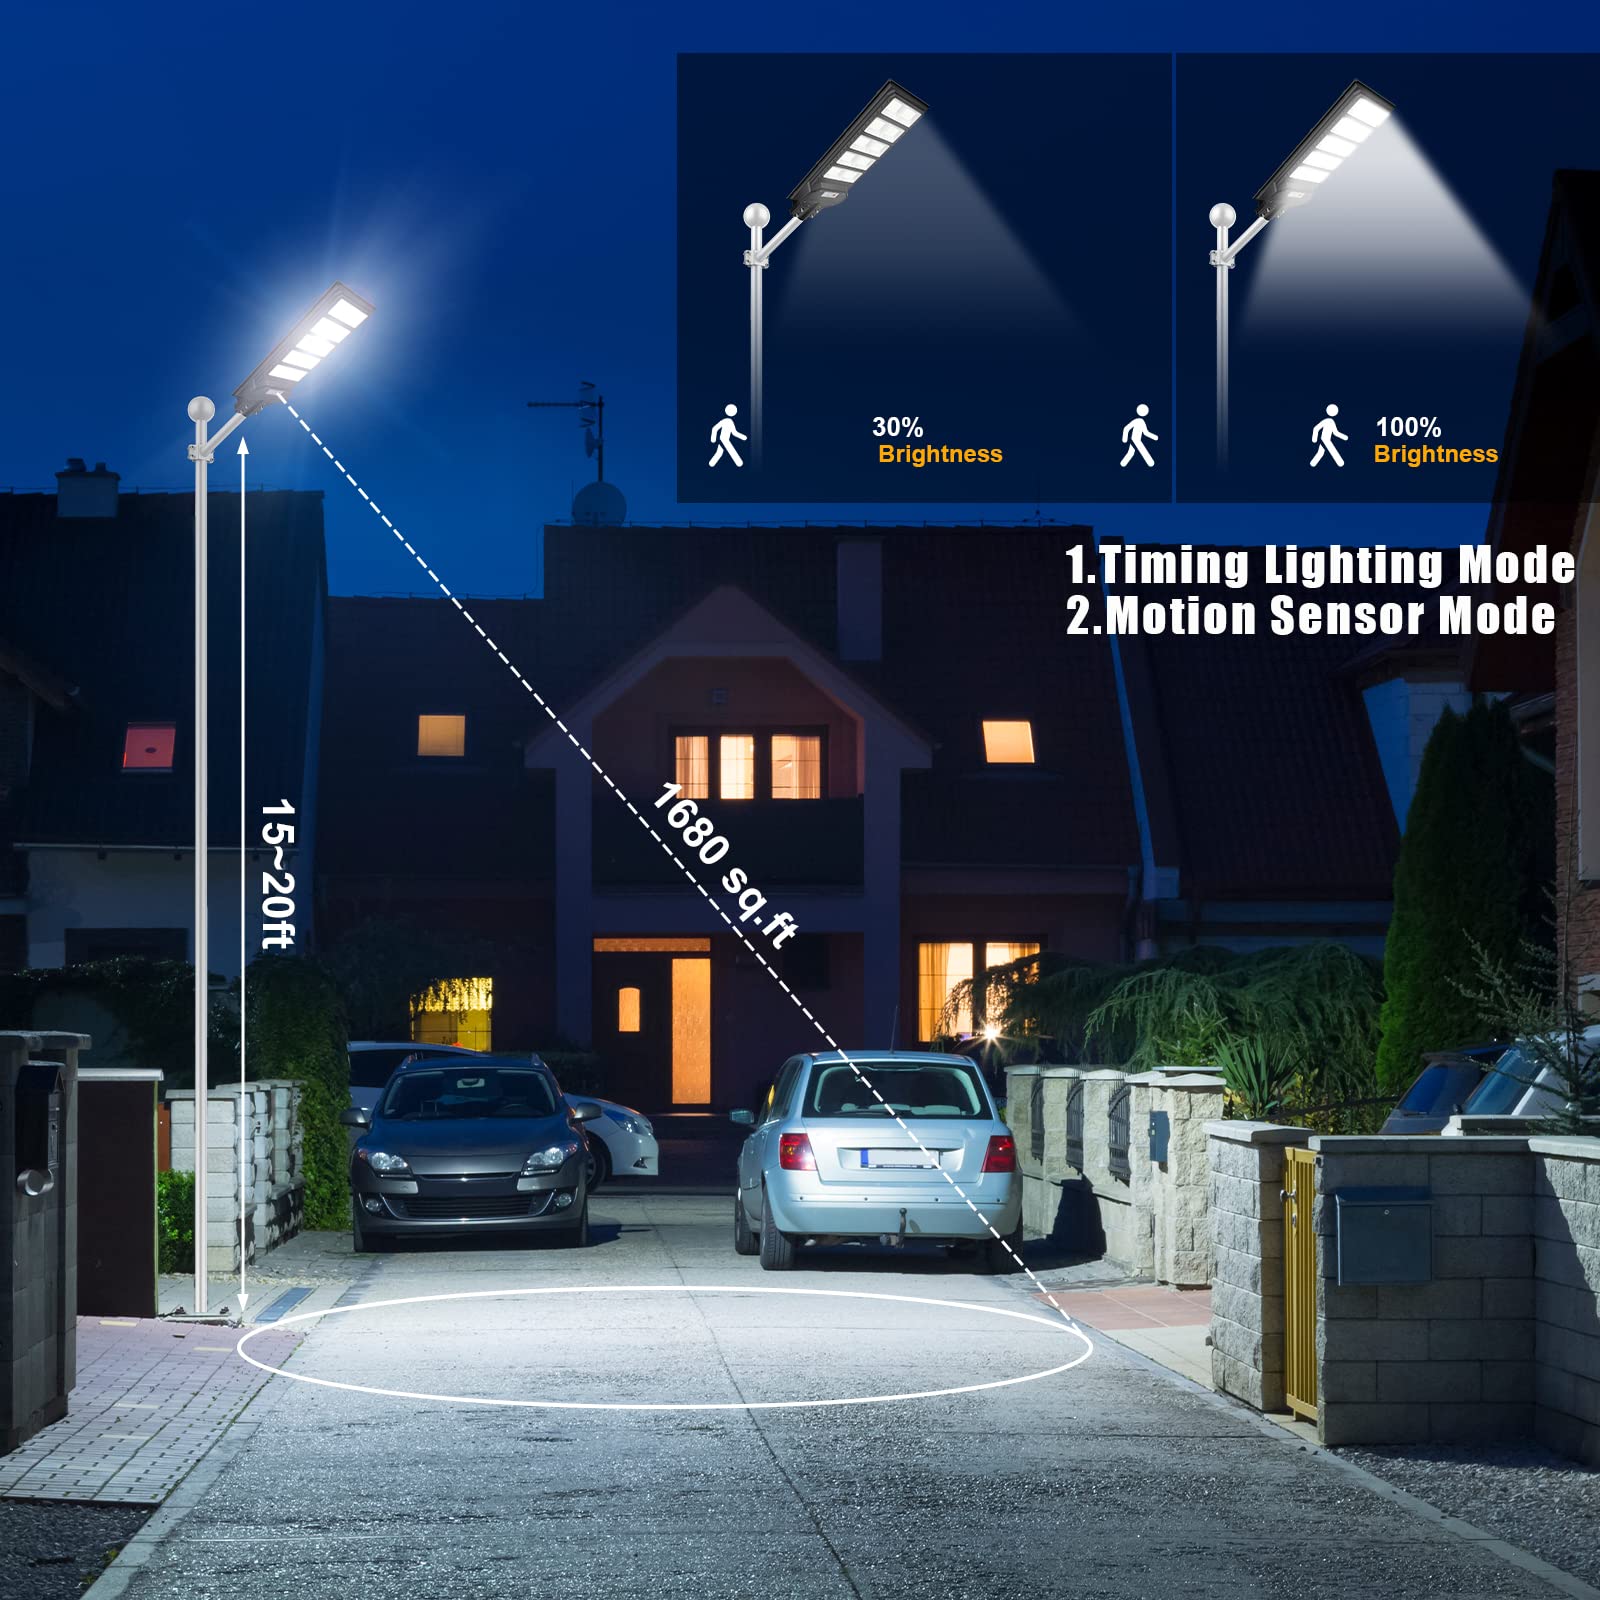 INSDEA 800W LED Solar Street Light Motion Sensor, 60000LM IP66 Waterproof Security Solar Flood Lights Outdoor with Remote Control, Dusk to Dawn Solar Lights for Outside Garden Yard Parking Lot